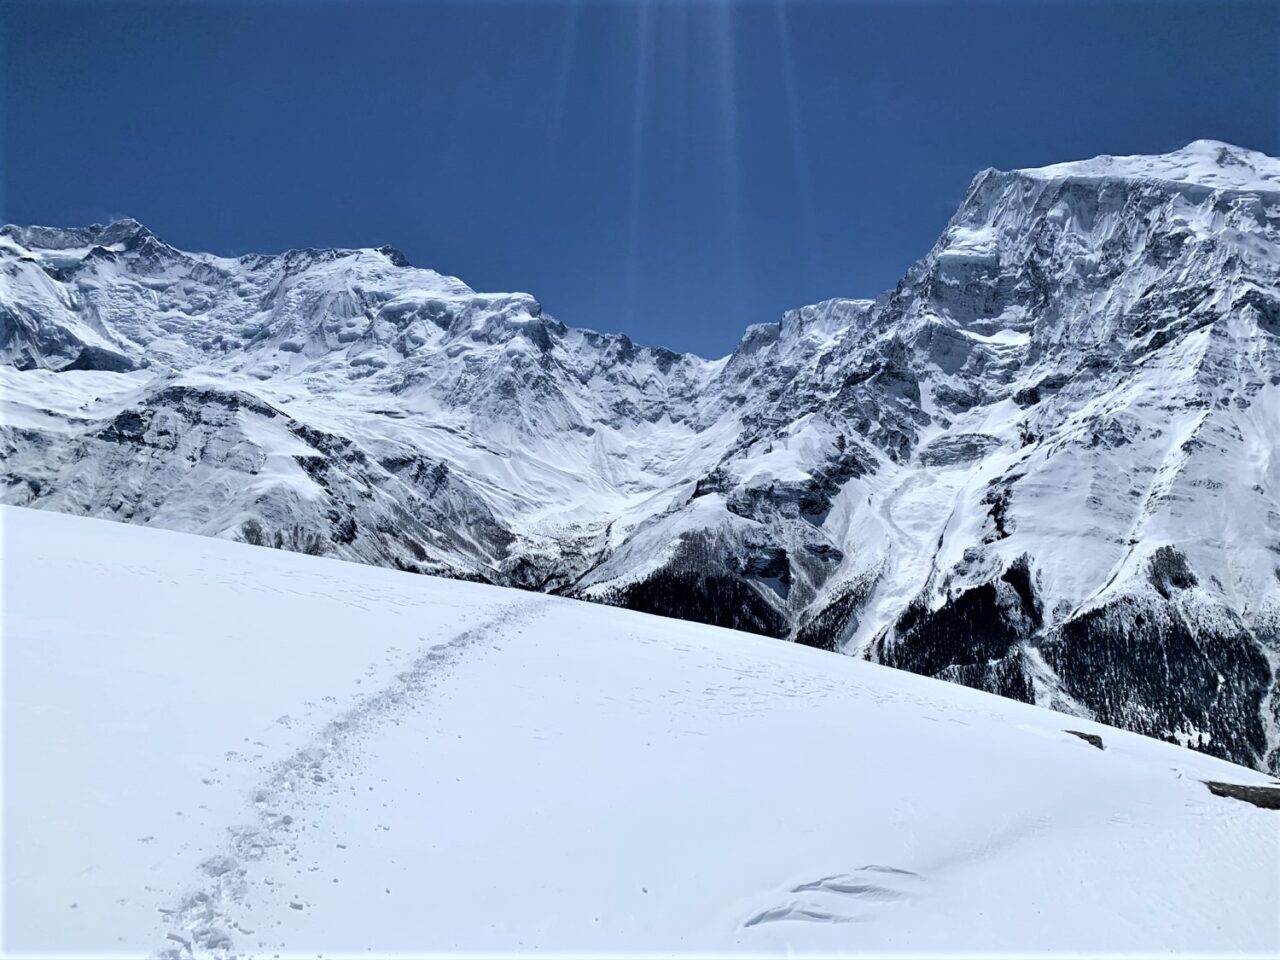 Dangers in Nepal while trekking - snow blindness